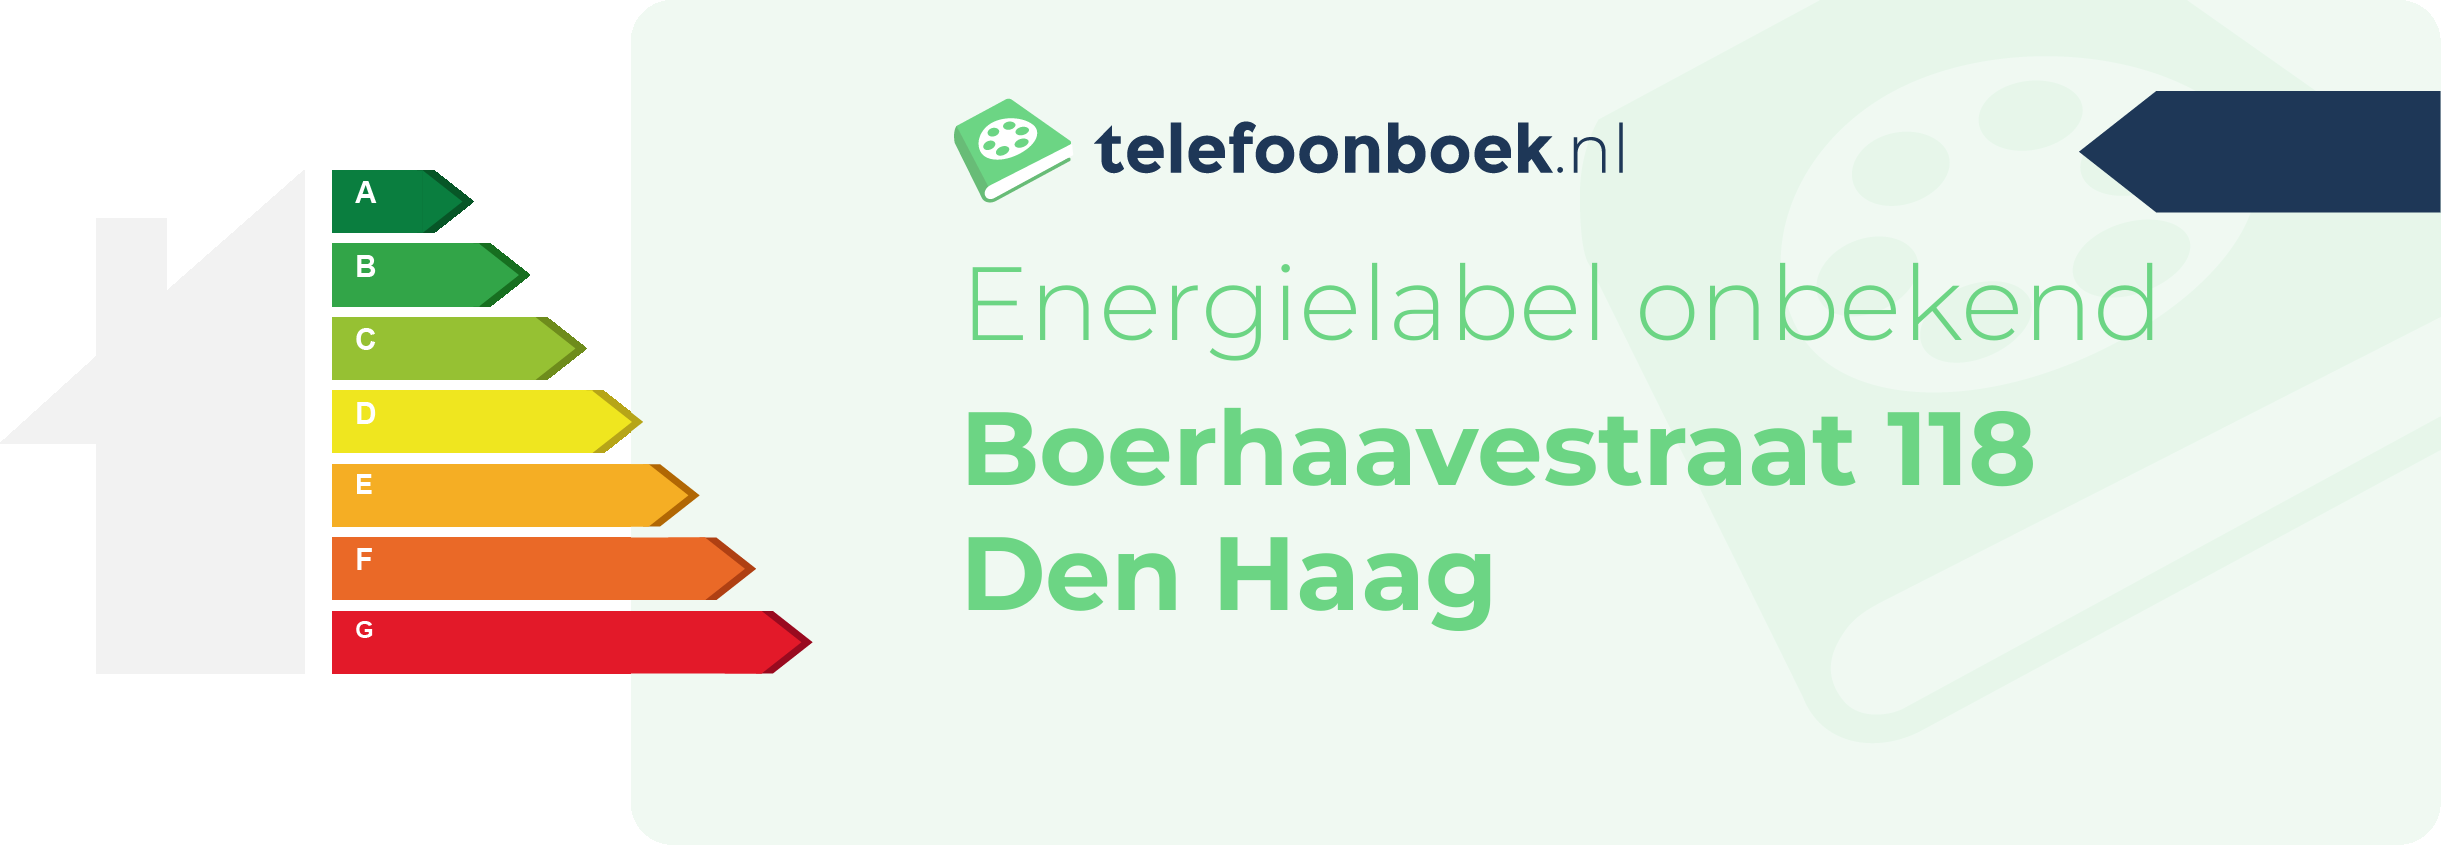 Energielabel Boerhaavestraat 118 Den Haag